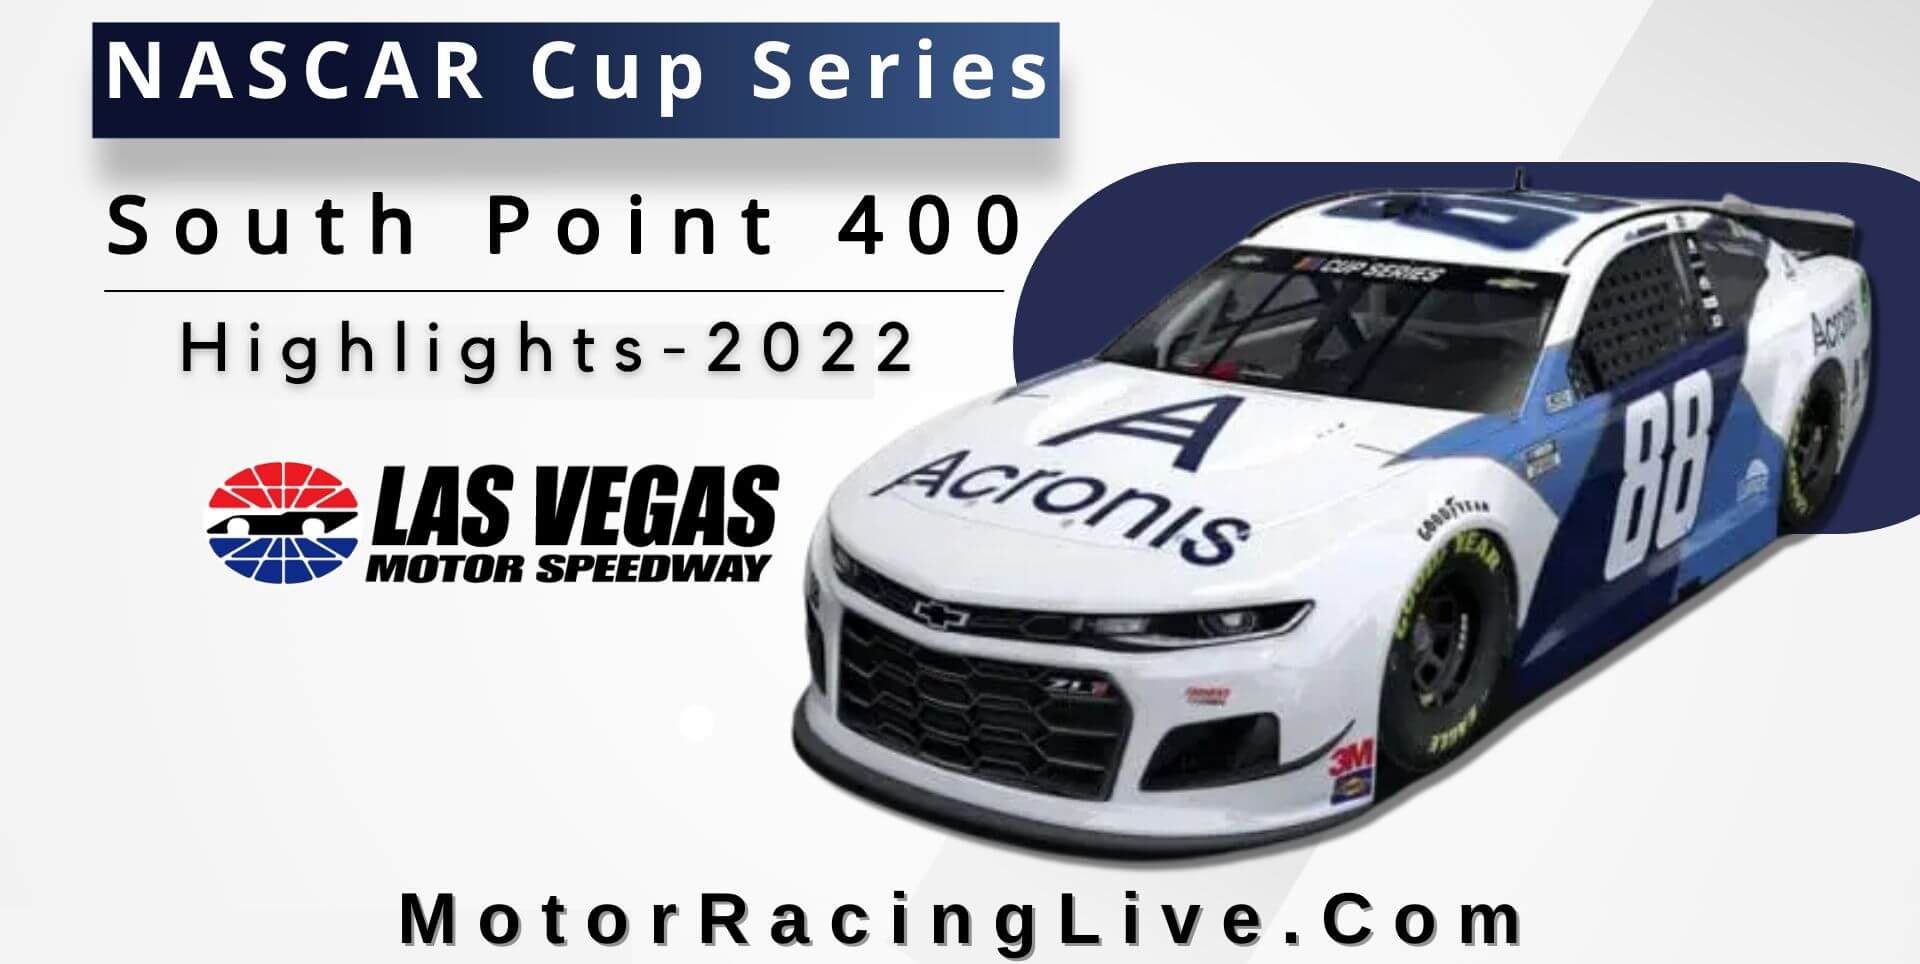 South Point 400 Highlights 2022 NASCAR Cup